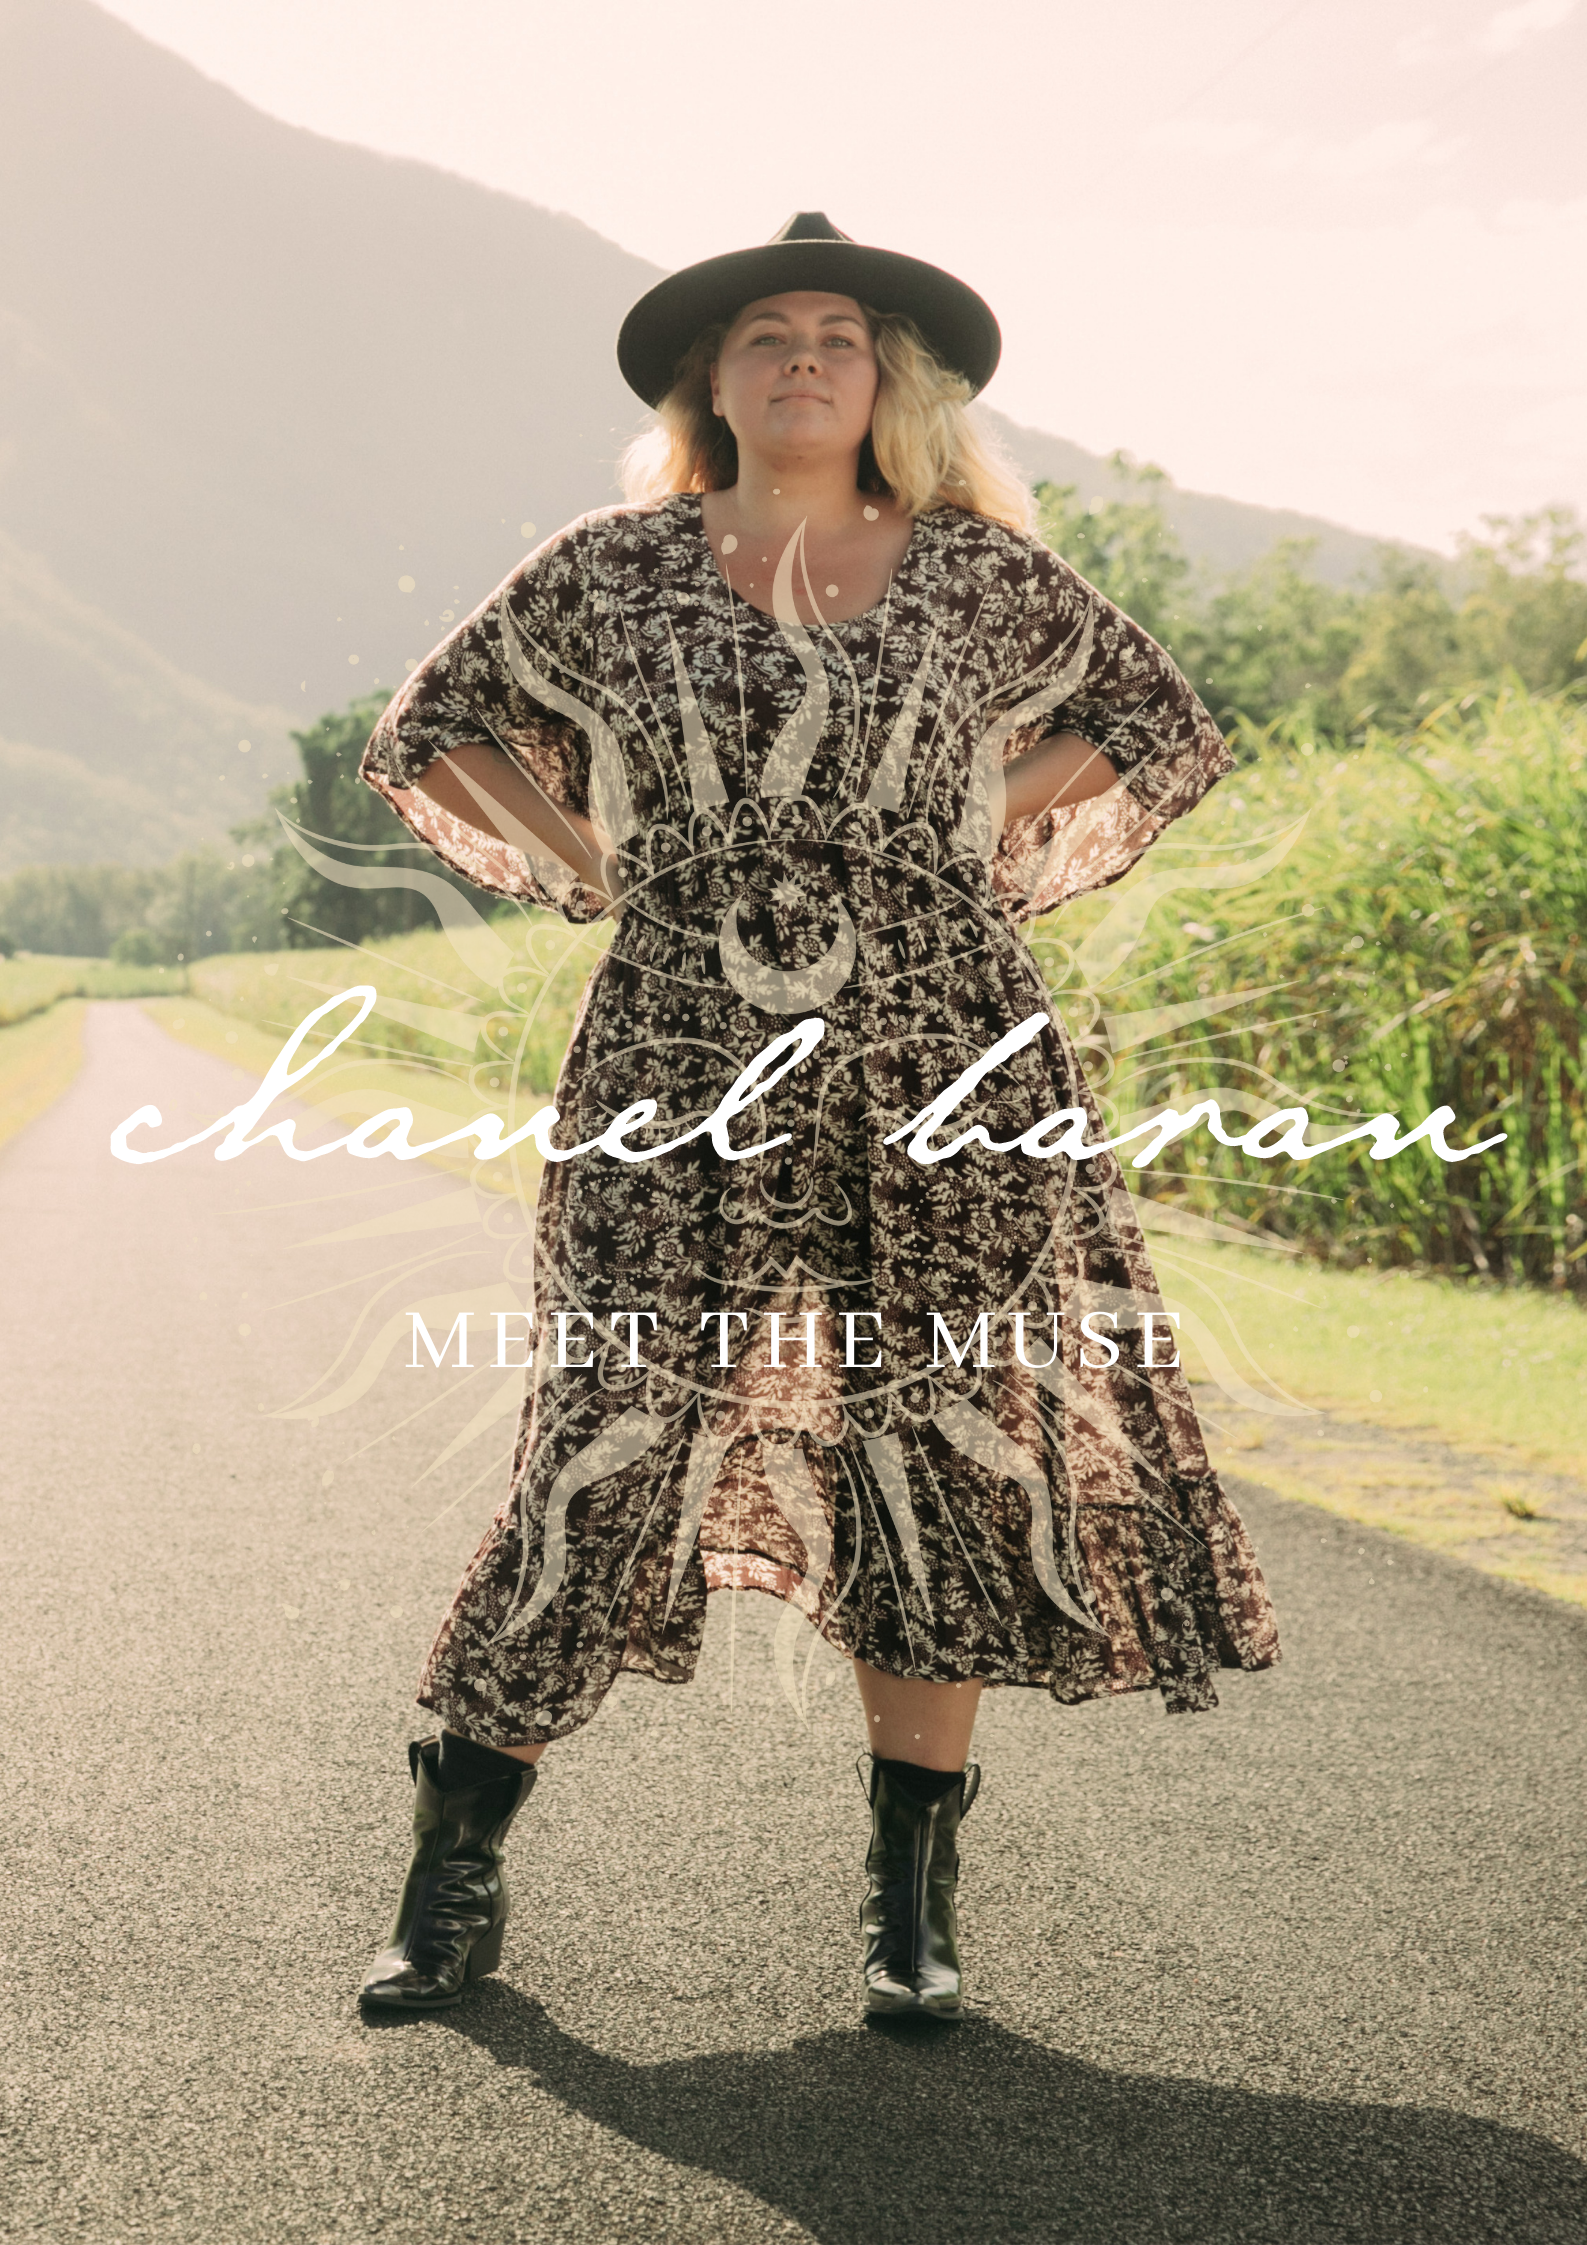 Meet the Muse: Chanel Baran